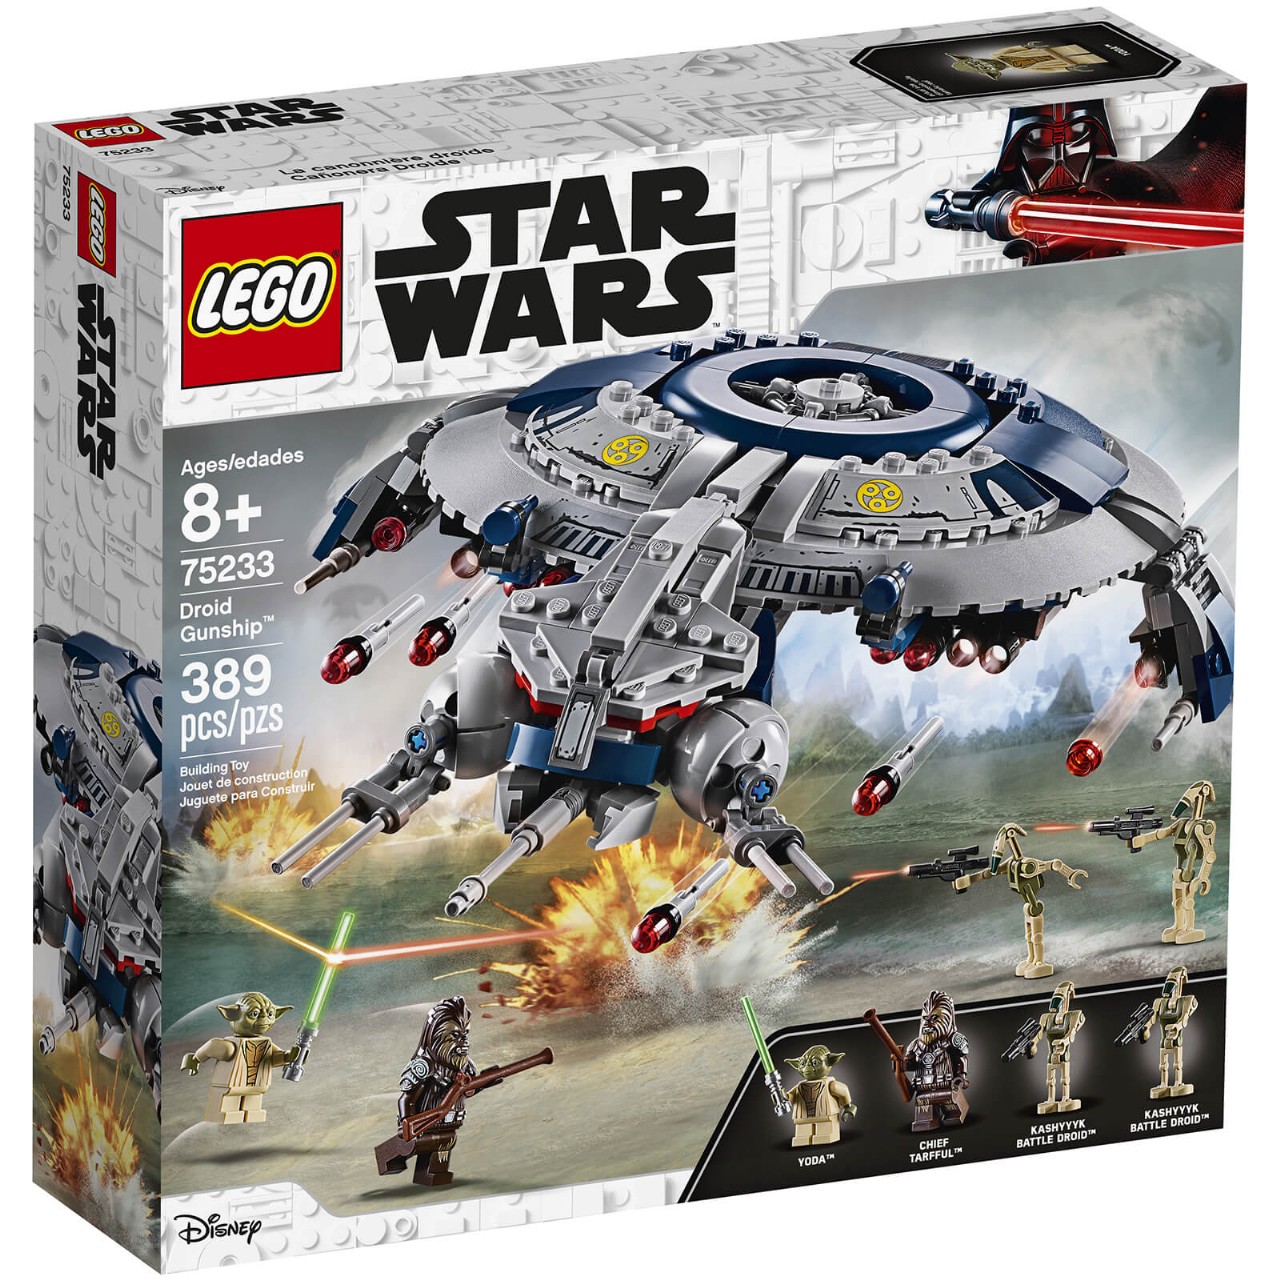 LEGO Star Wars Classic Droid Gunship